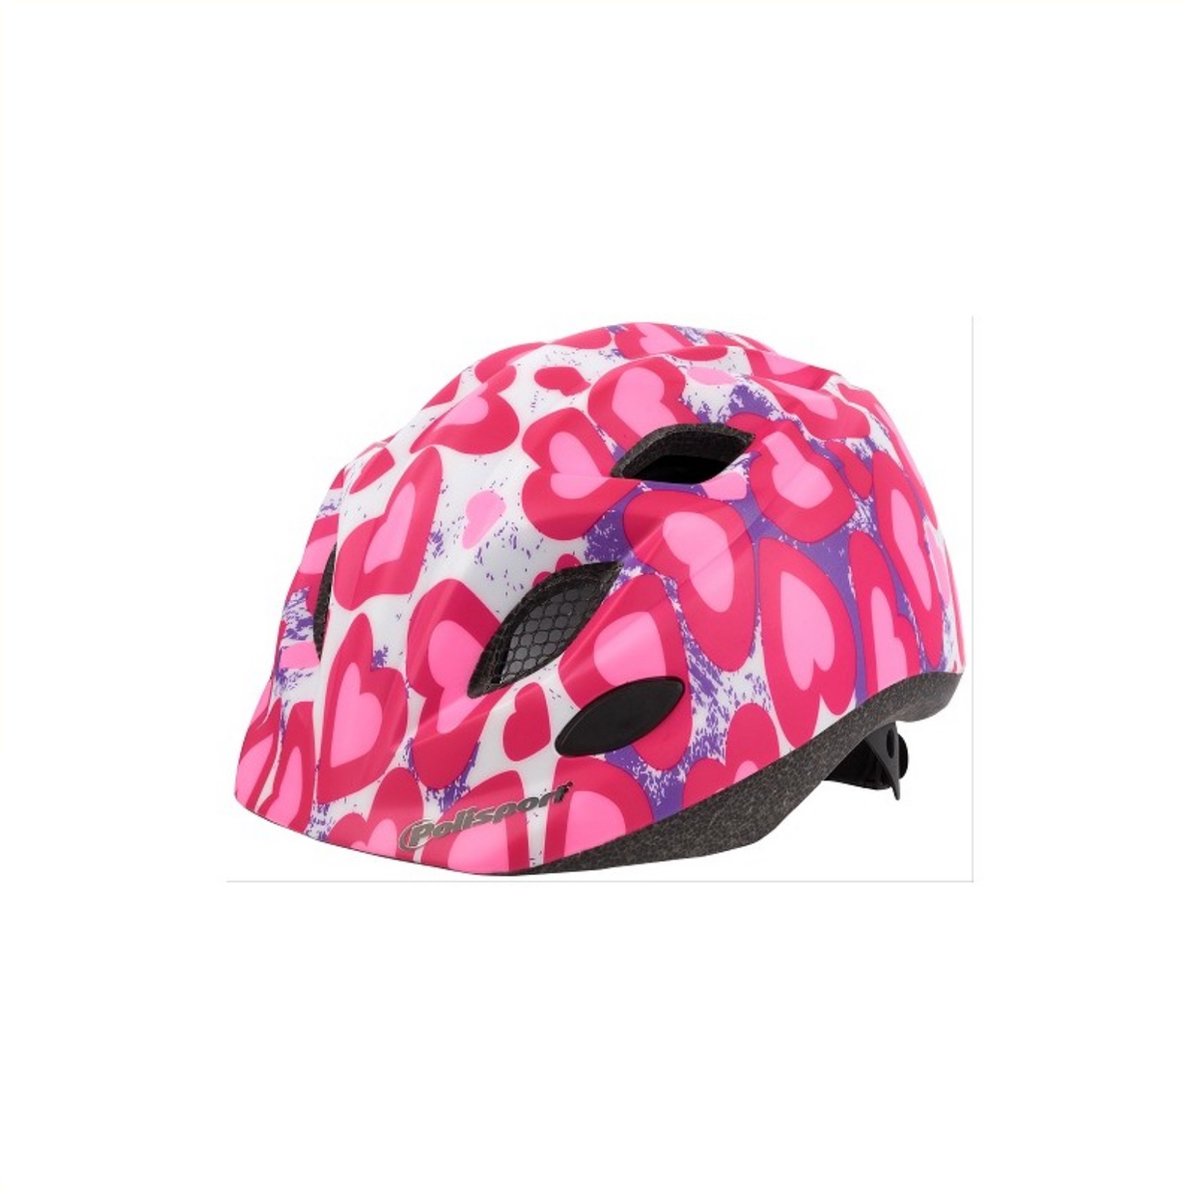 Polisport Junior premium fietshelm s 52-56cm glitter hearts roze (5604415117770)